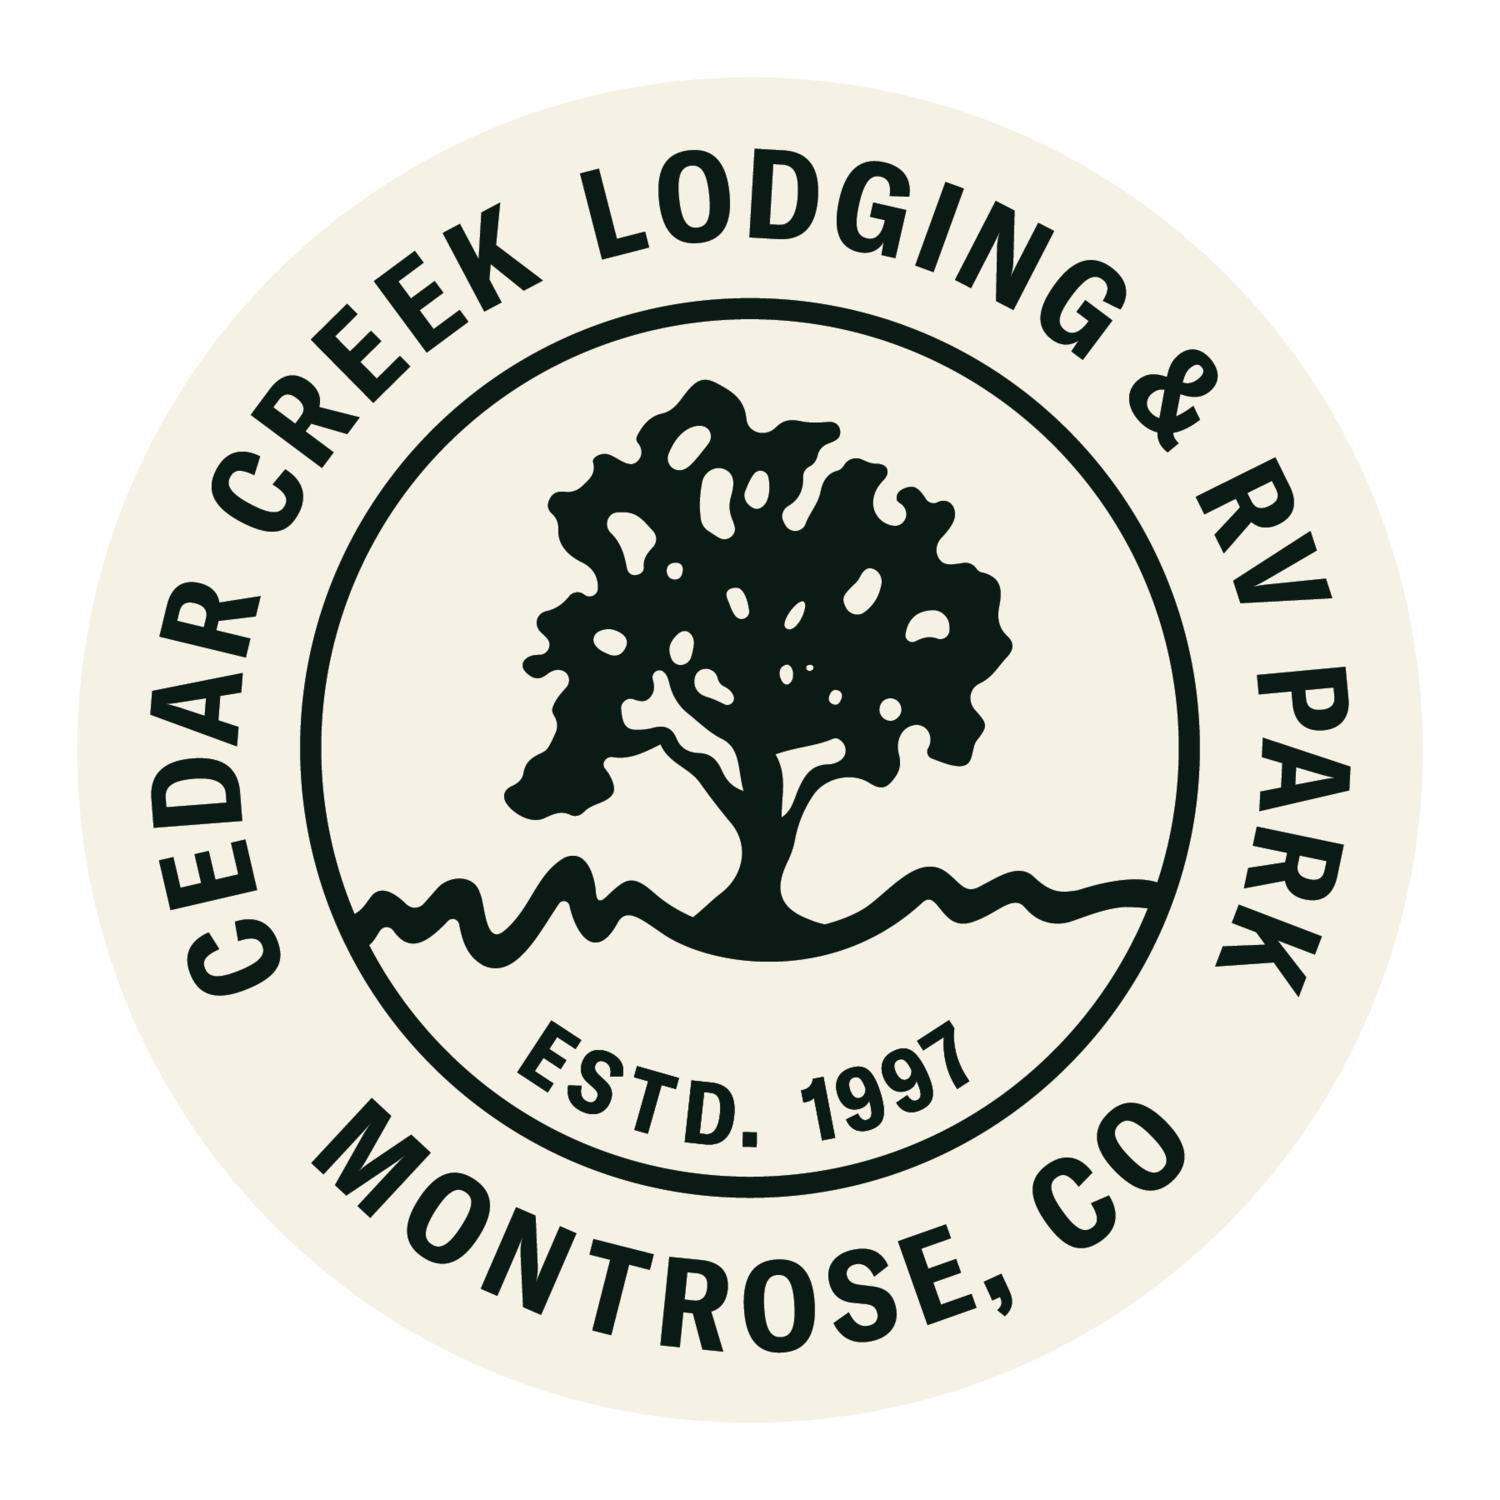 Cedar Creek RV Park and Lodging